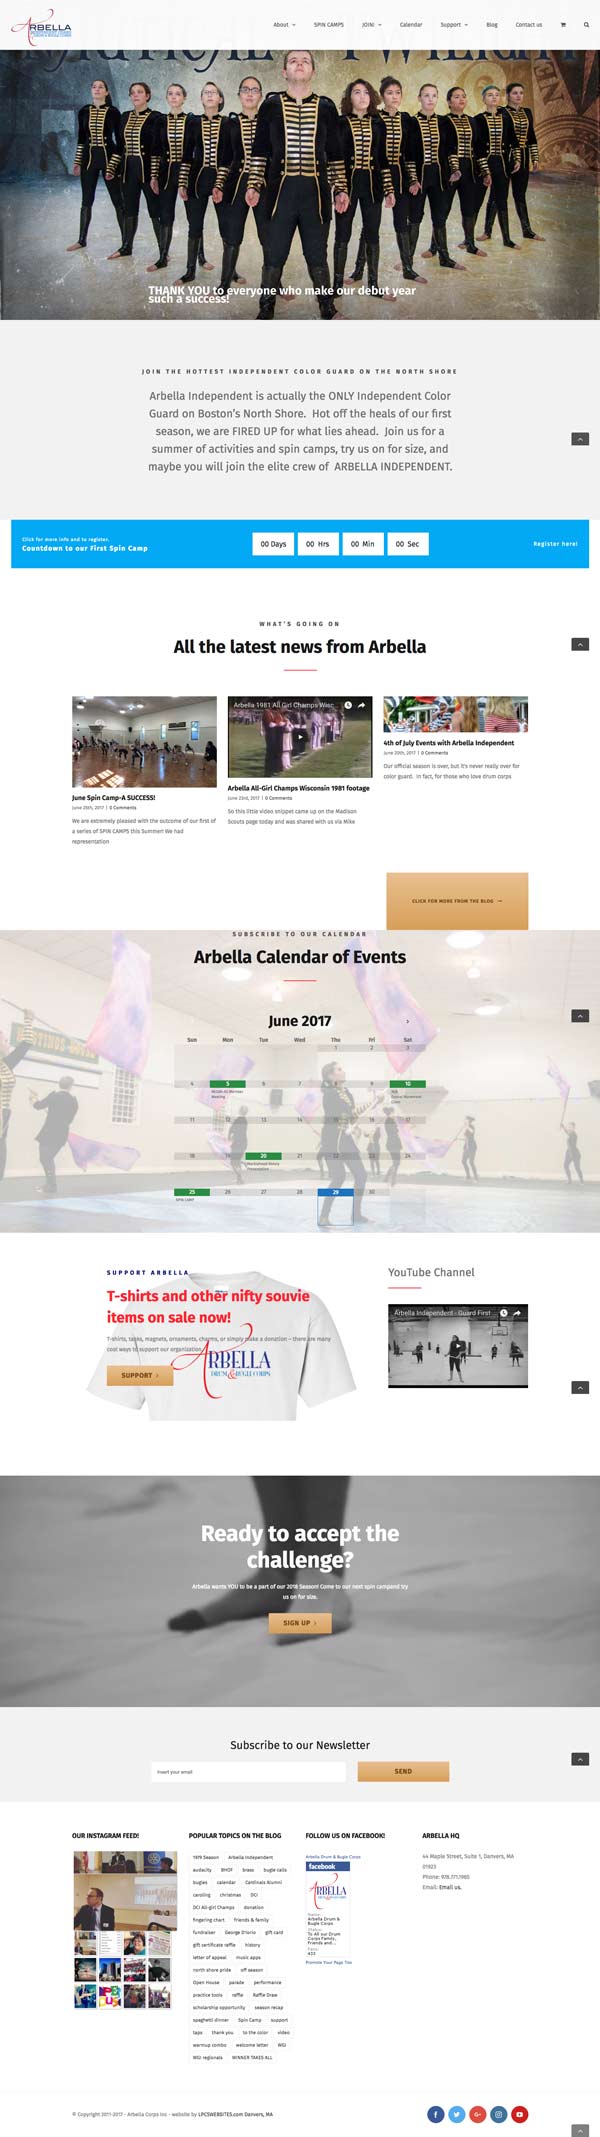 local non-profit gets website makeover danvers arbella drum bugle corps